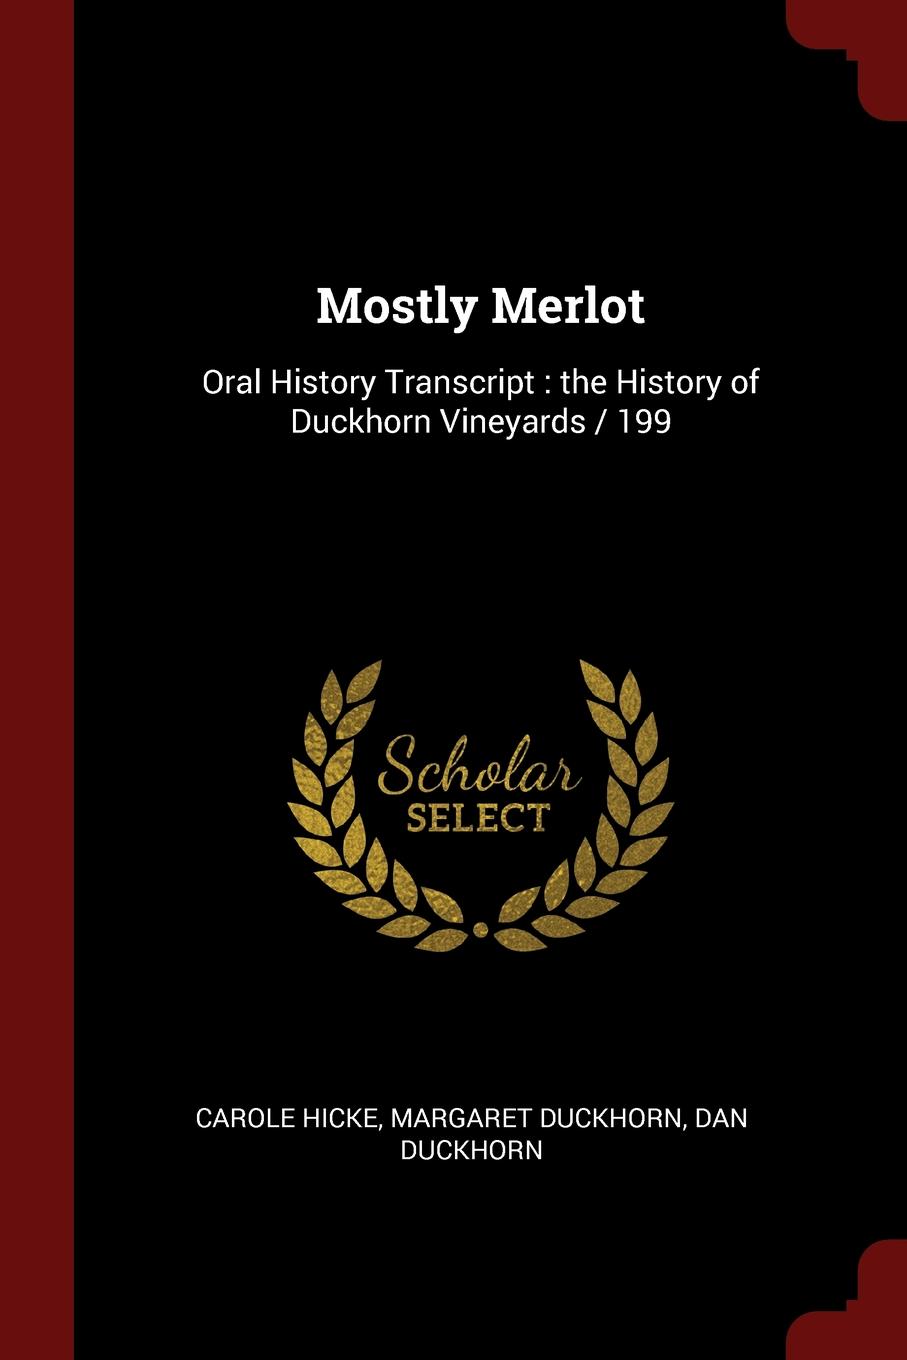 Mostly Merlot. Oral History Transcript : the History of Duckhorn Vineyards / 199